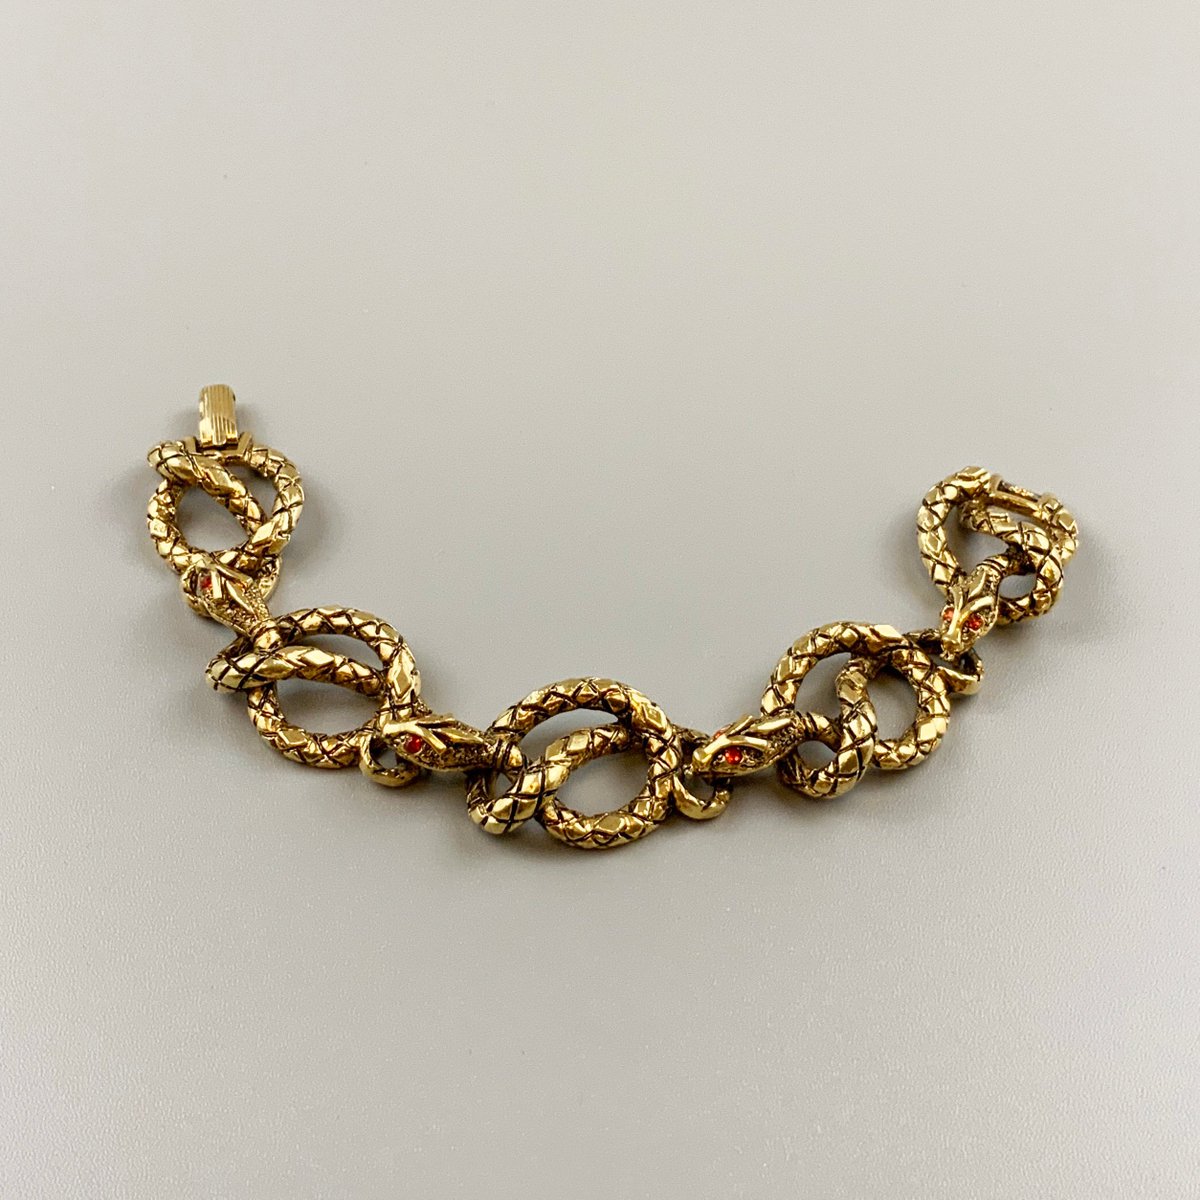 From the vault :) Rare hard to find Arthur Pepper snake bracelet etsy.me/391EYu0 #vintagejewelry #snakebracelet #goldsnake #arthurpepper